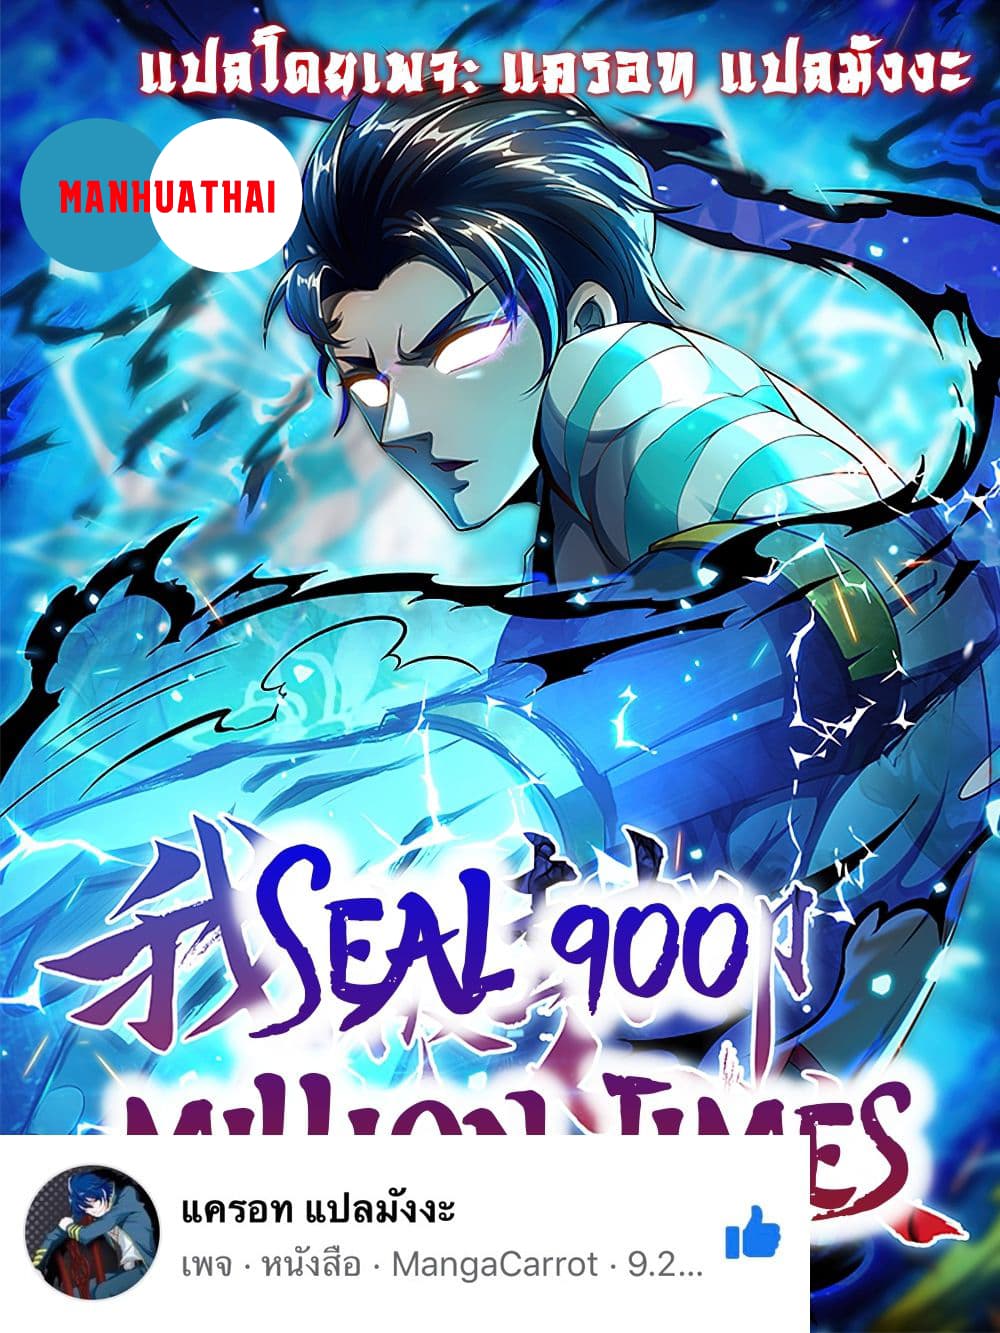 Seal 900 Million Times 20-20